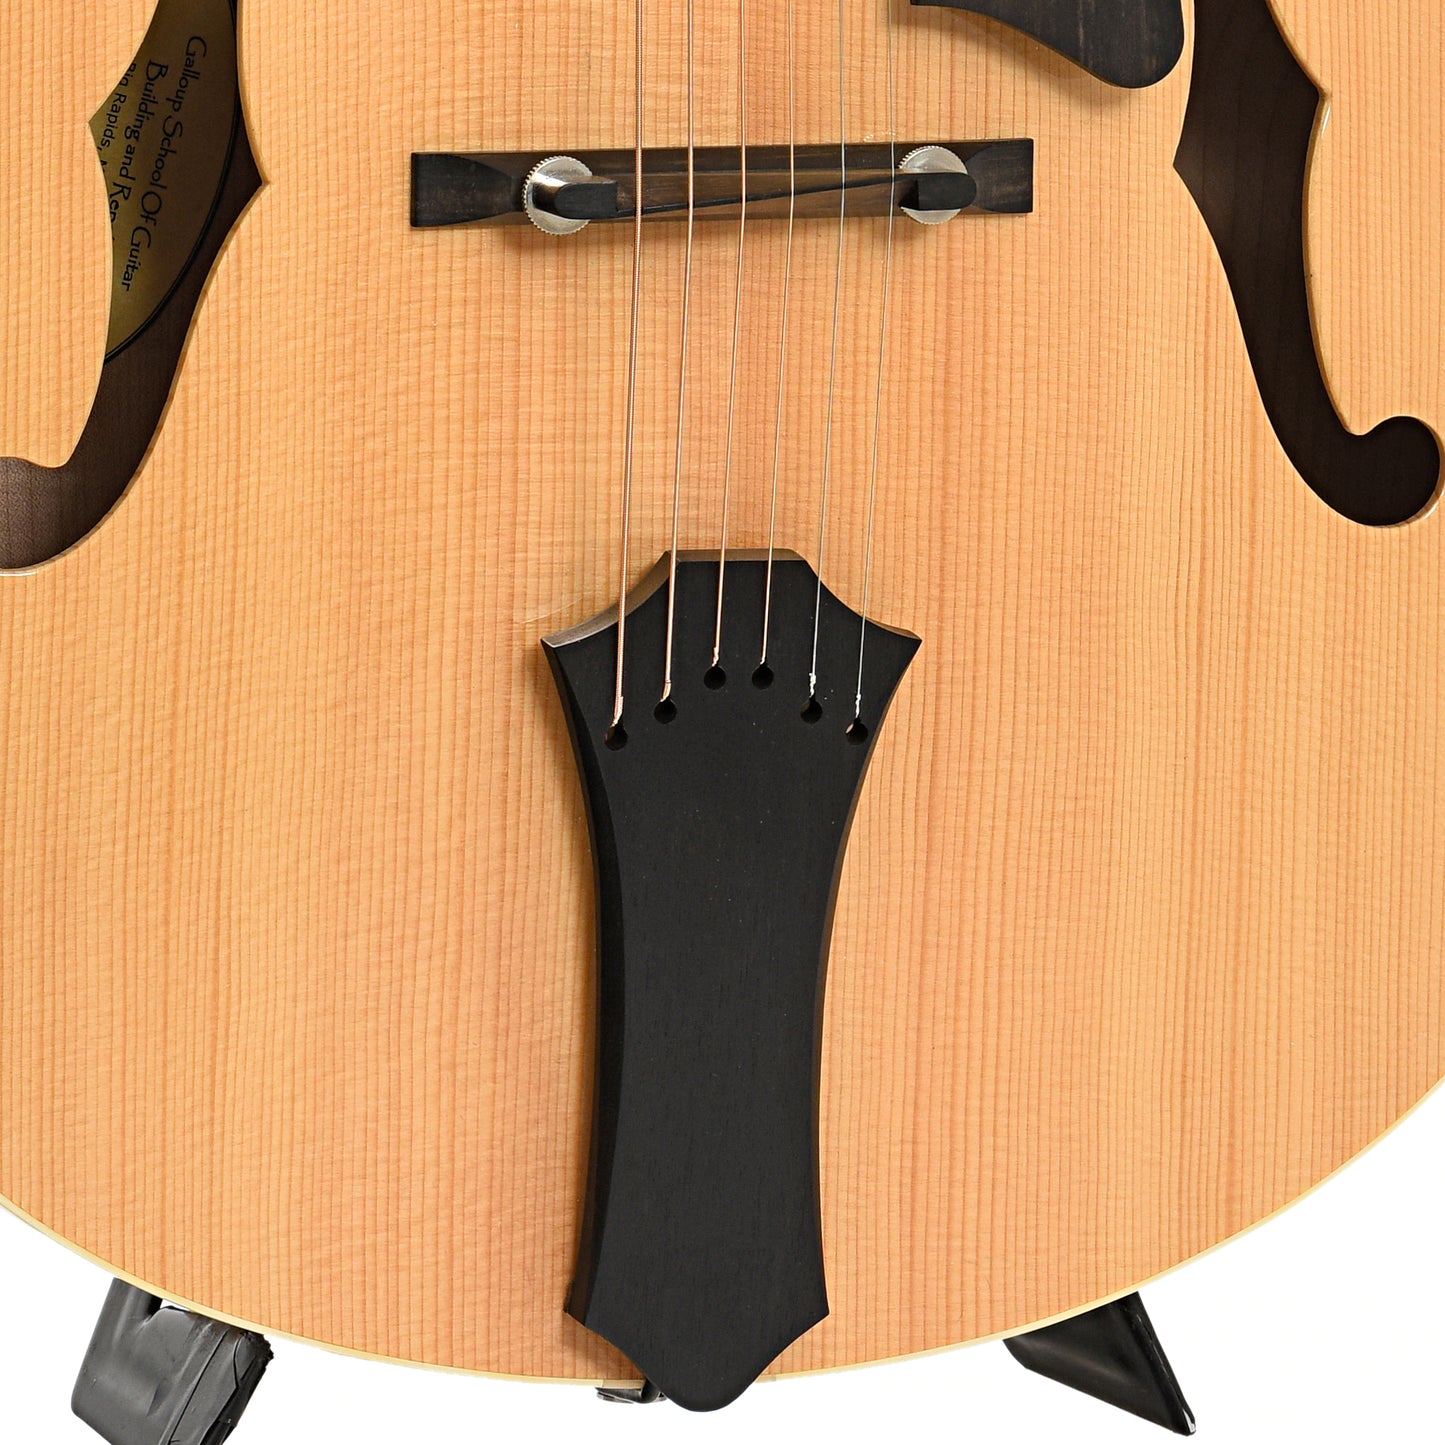 tailpiece and bridge of C. Dygard Gallup School Archtop Guitar (c.2014)